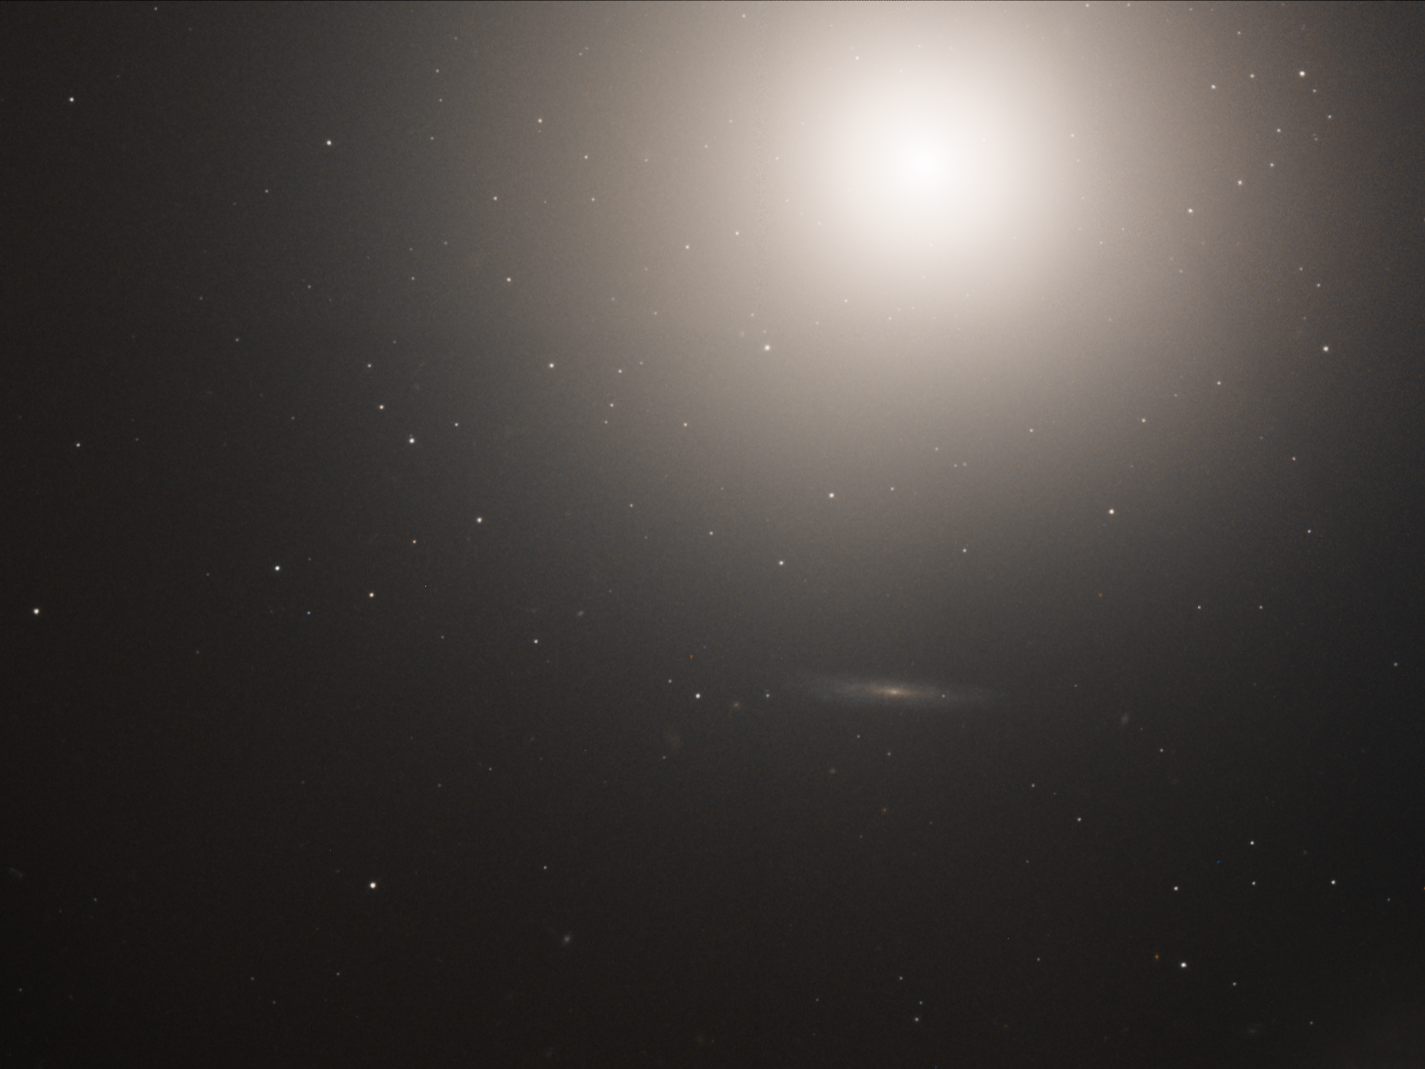 Hubble image of M89